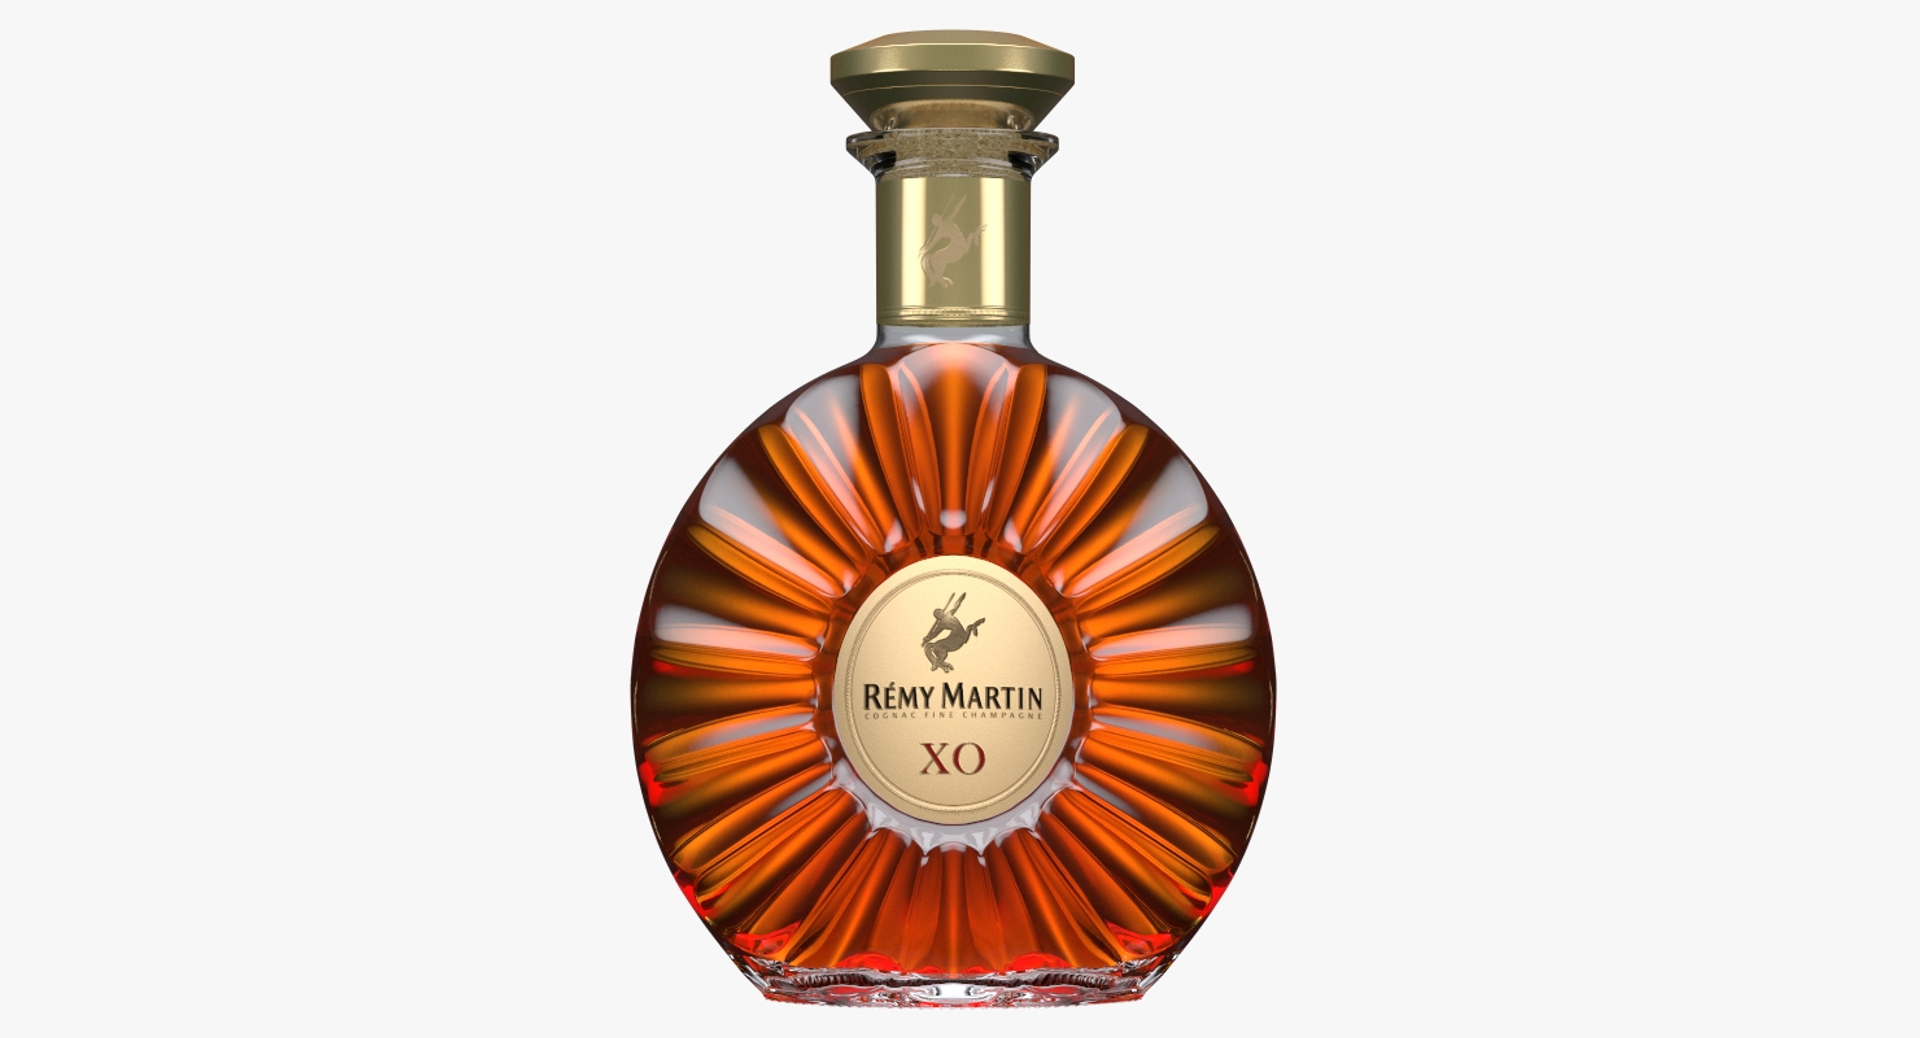 14 Remy Martin Louis Xiii Cognac Images, Stock Photos, 3D objects, &  Vectors